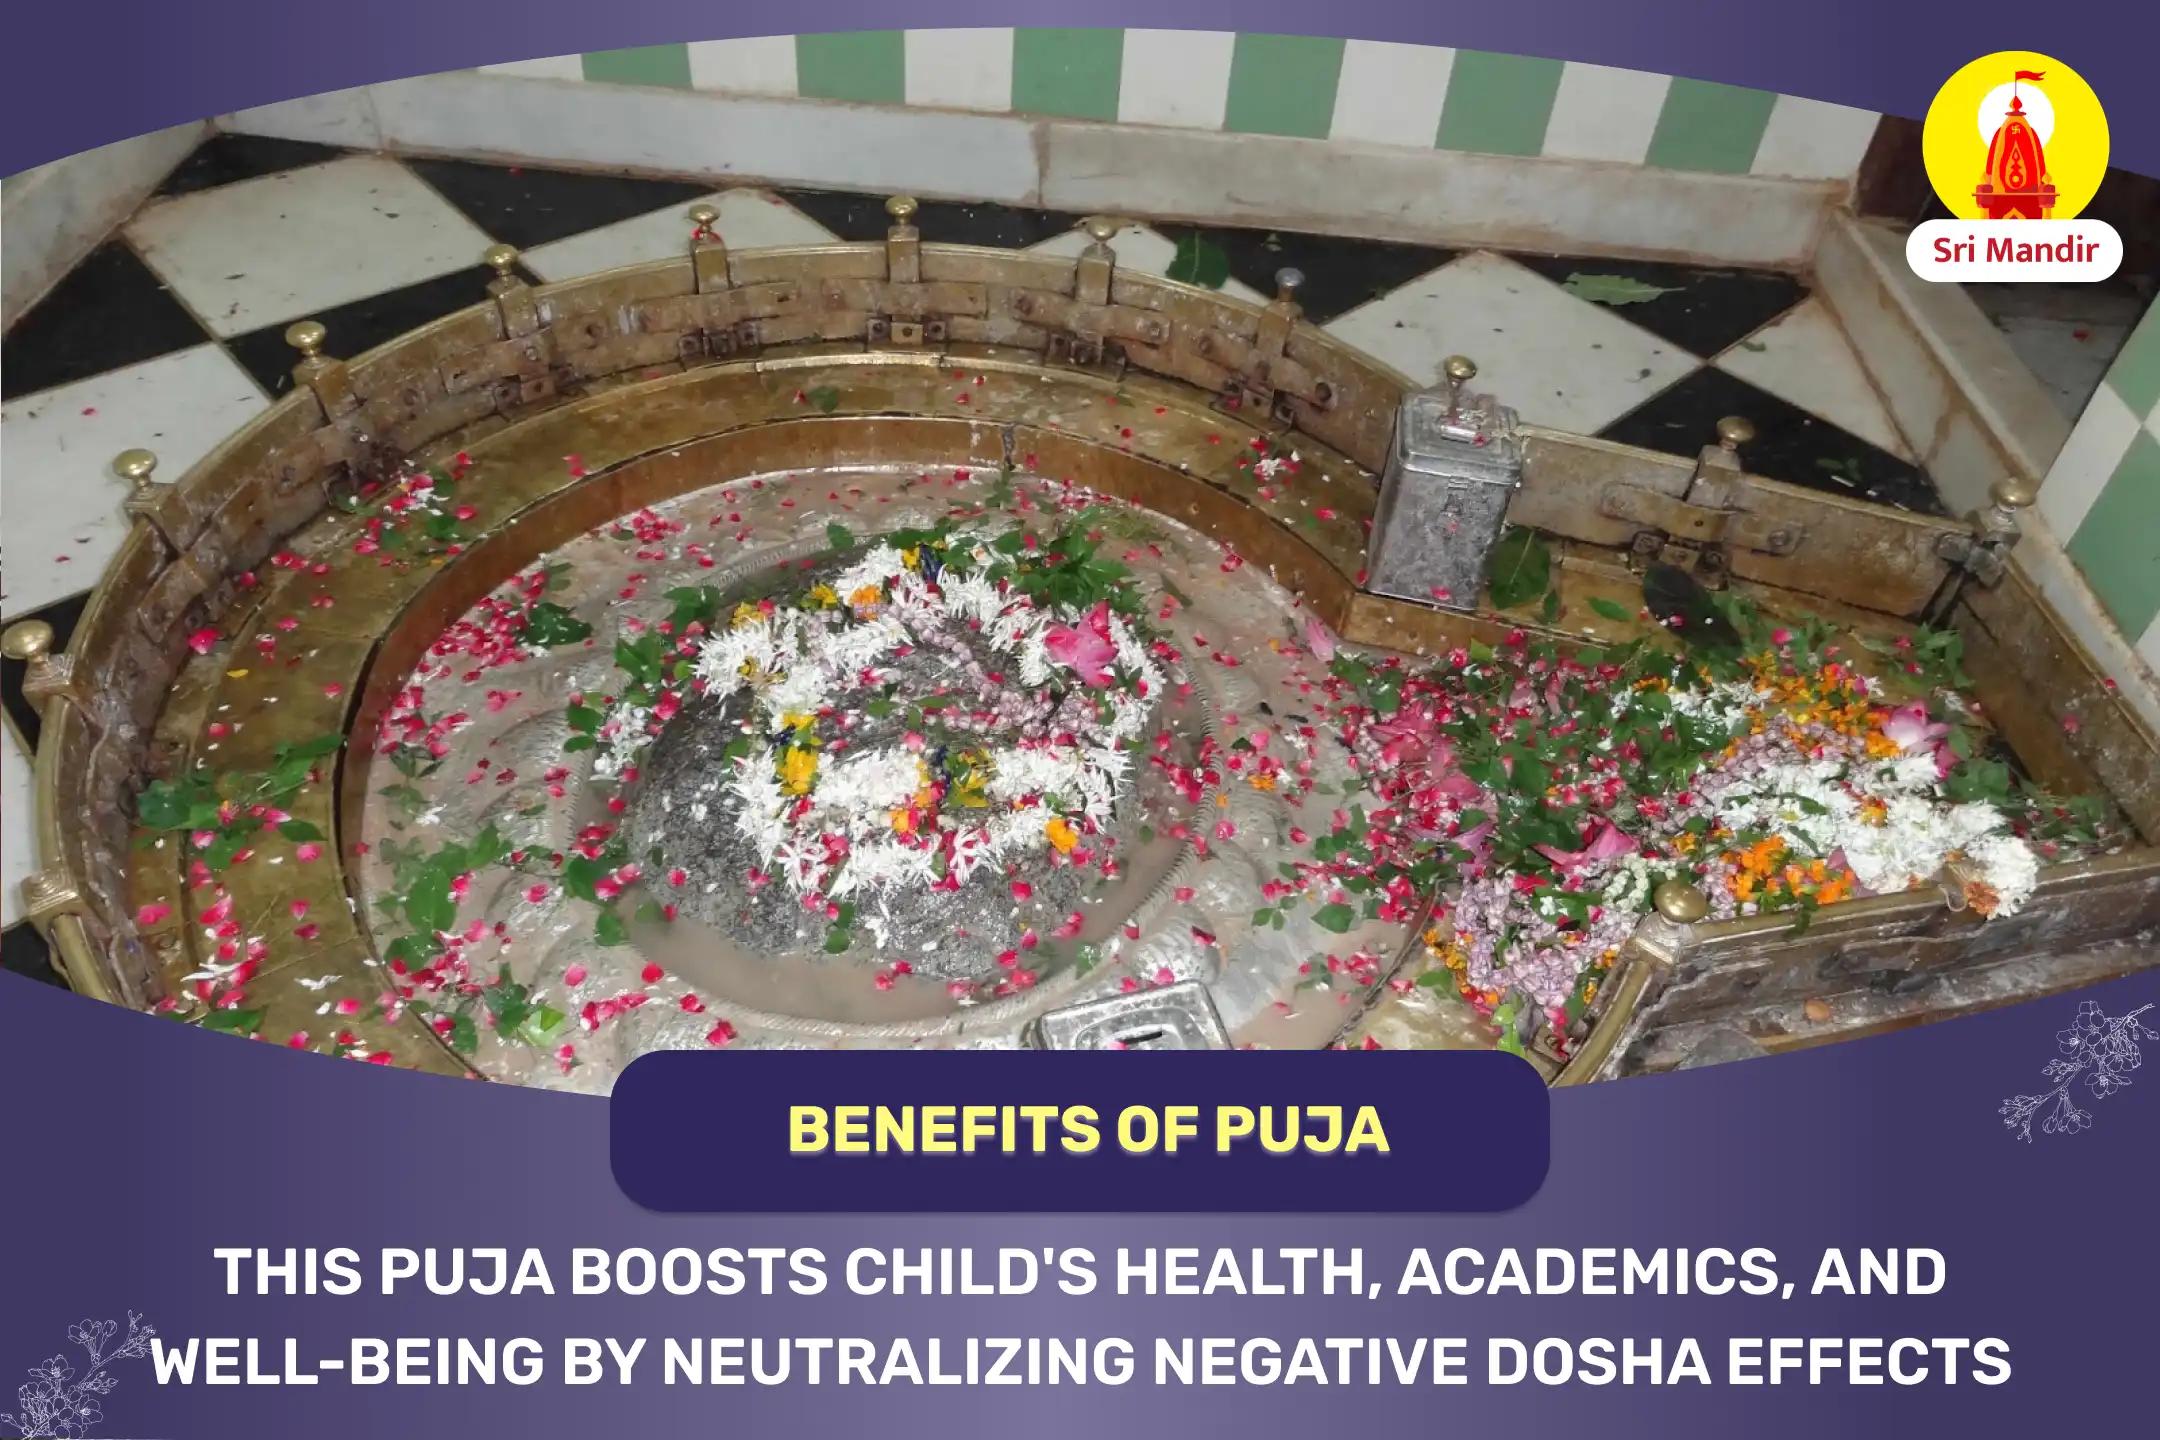 Kashi Special Gandmool Dosha Shanti Mahapuja for Health and Academic Success of your Children